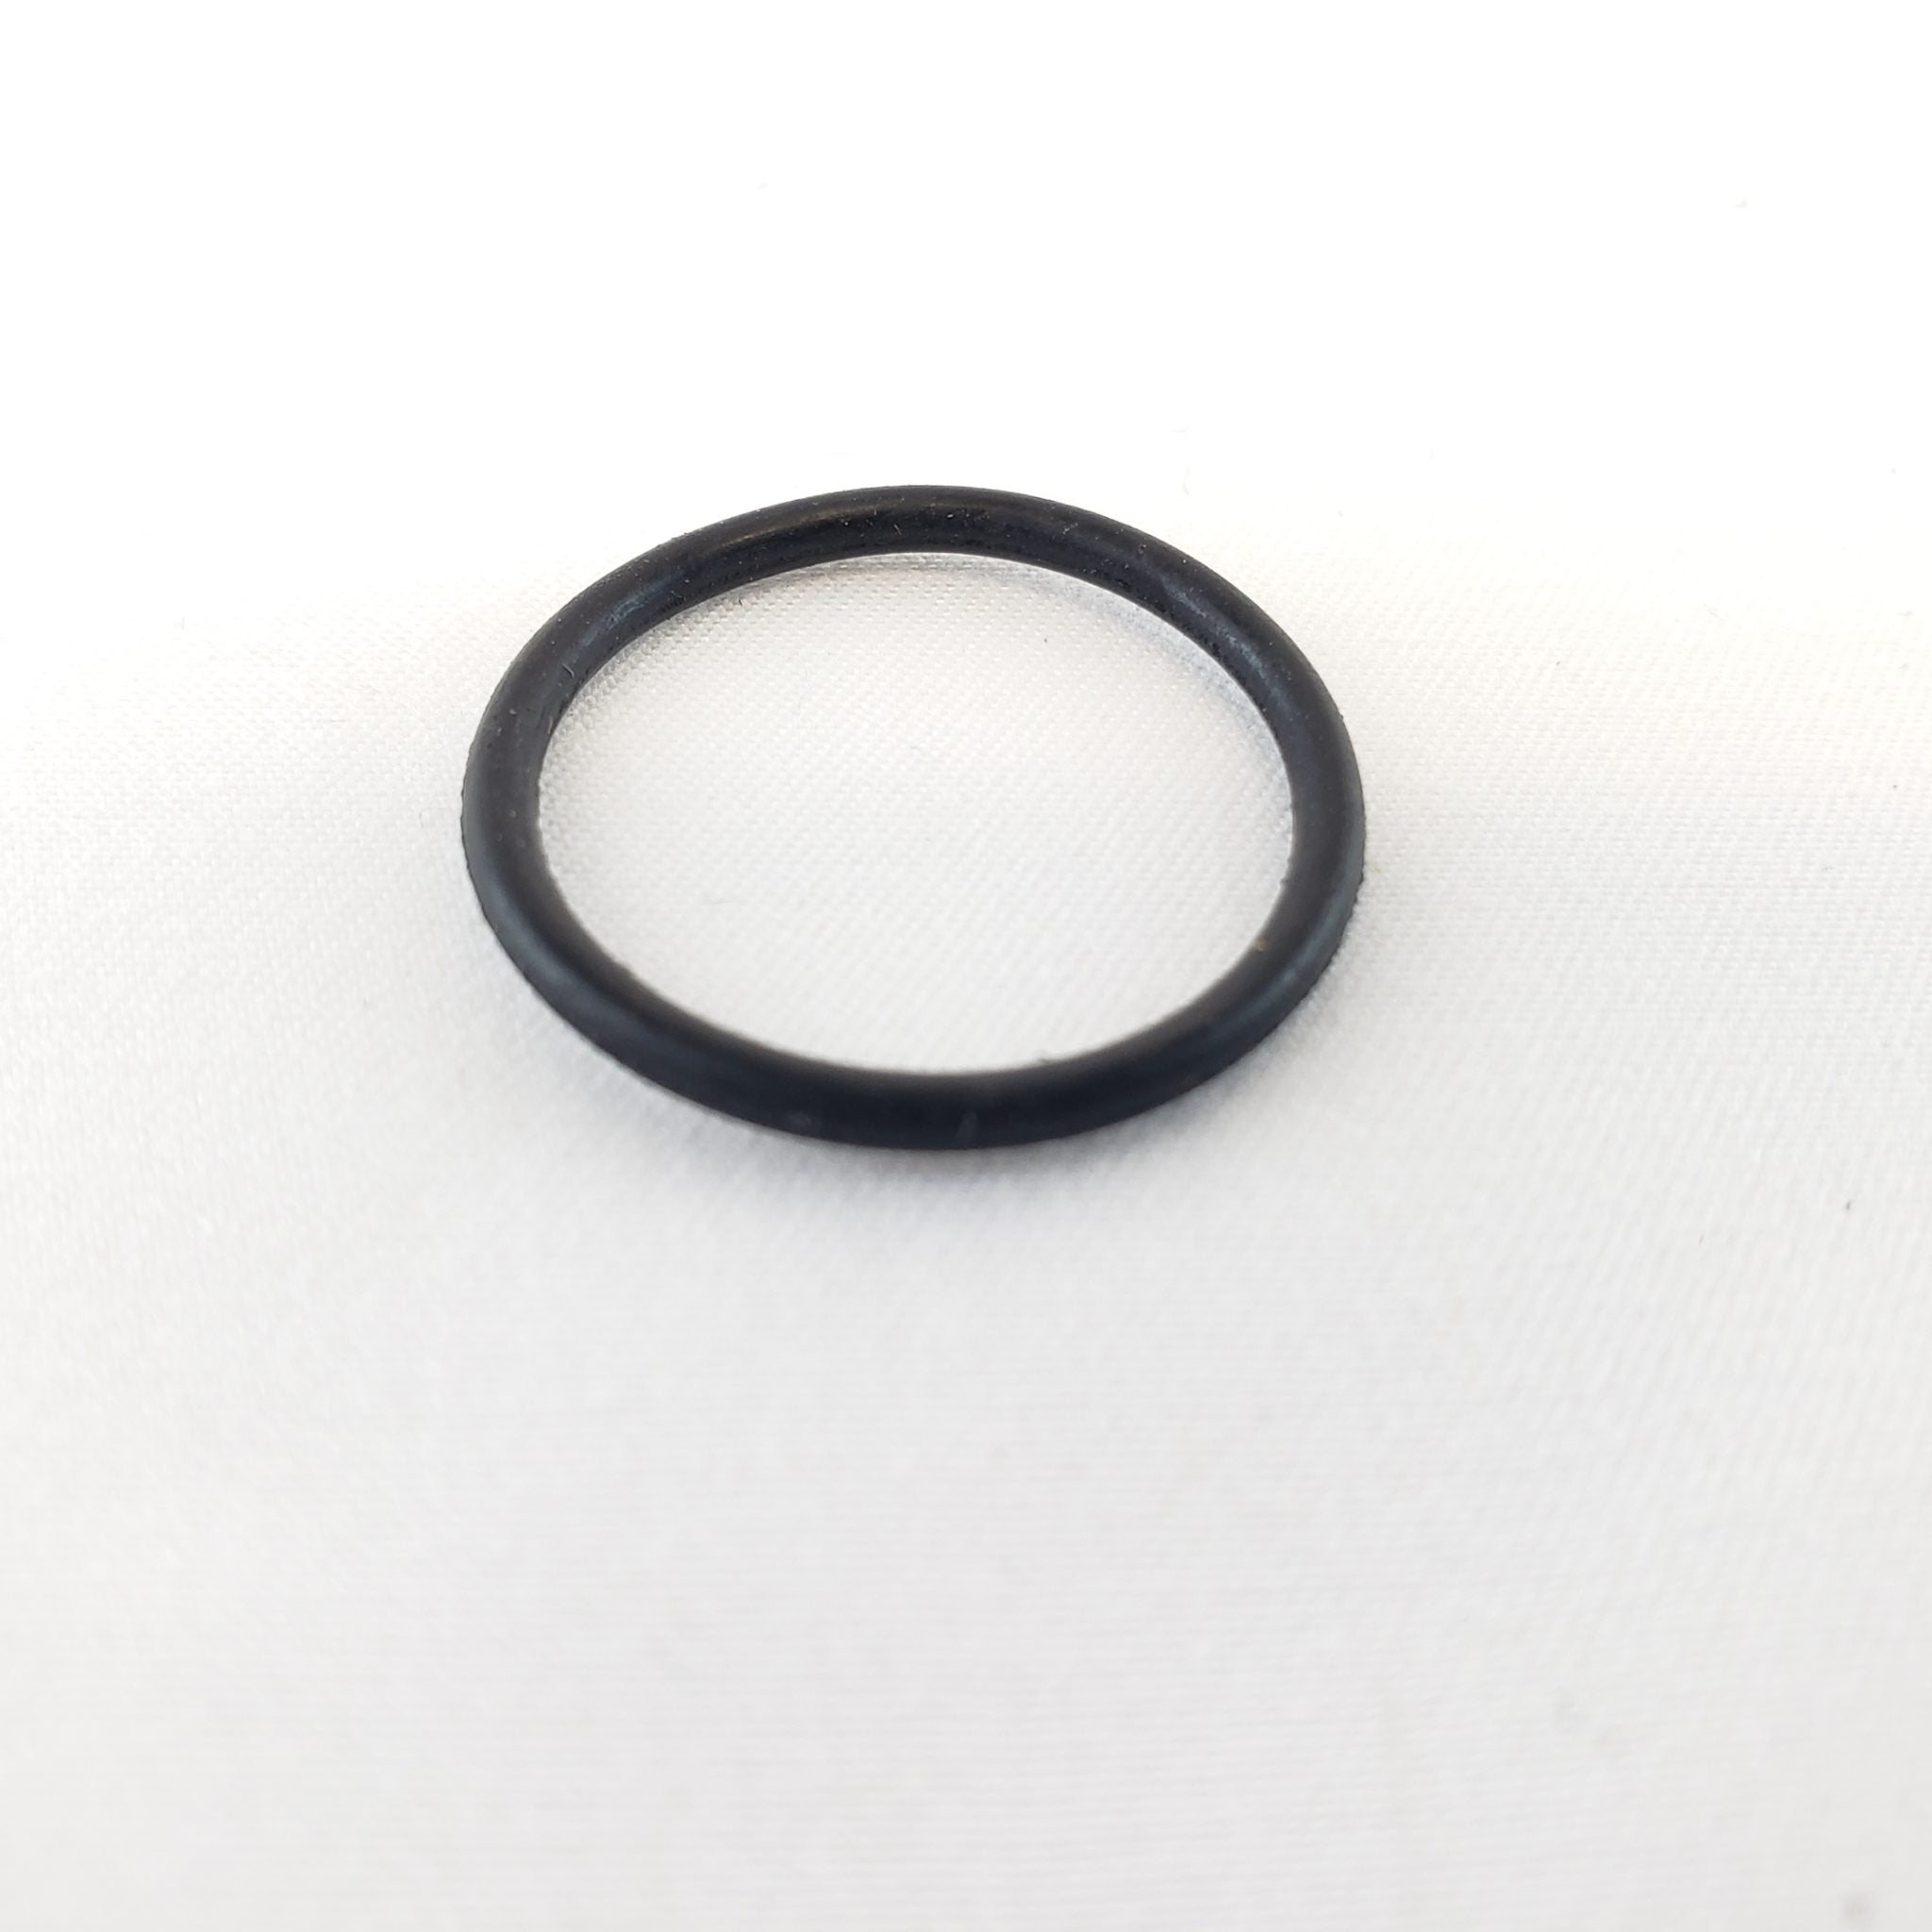 Lifegard Aquatics UV Bulb Sleeve O-Ring Rubber 3" or 5" Diameter– R450232